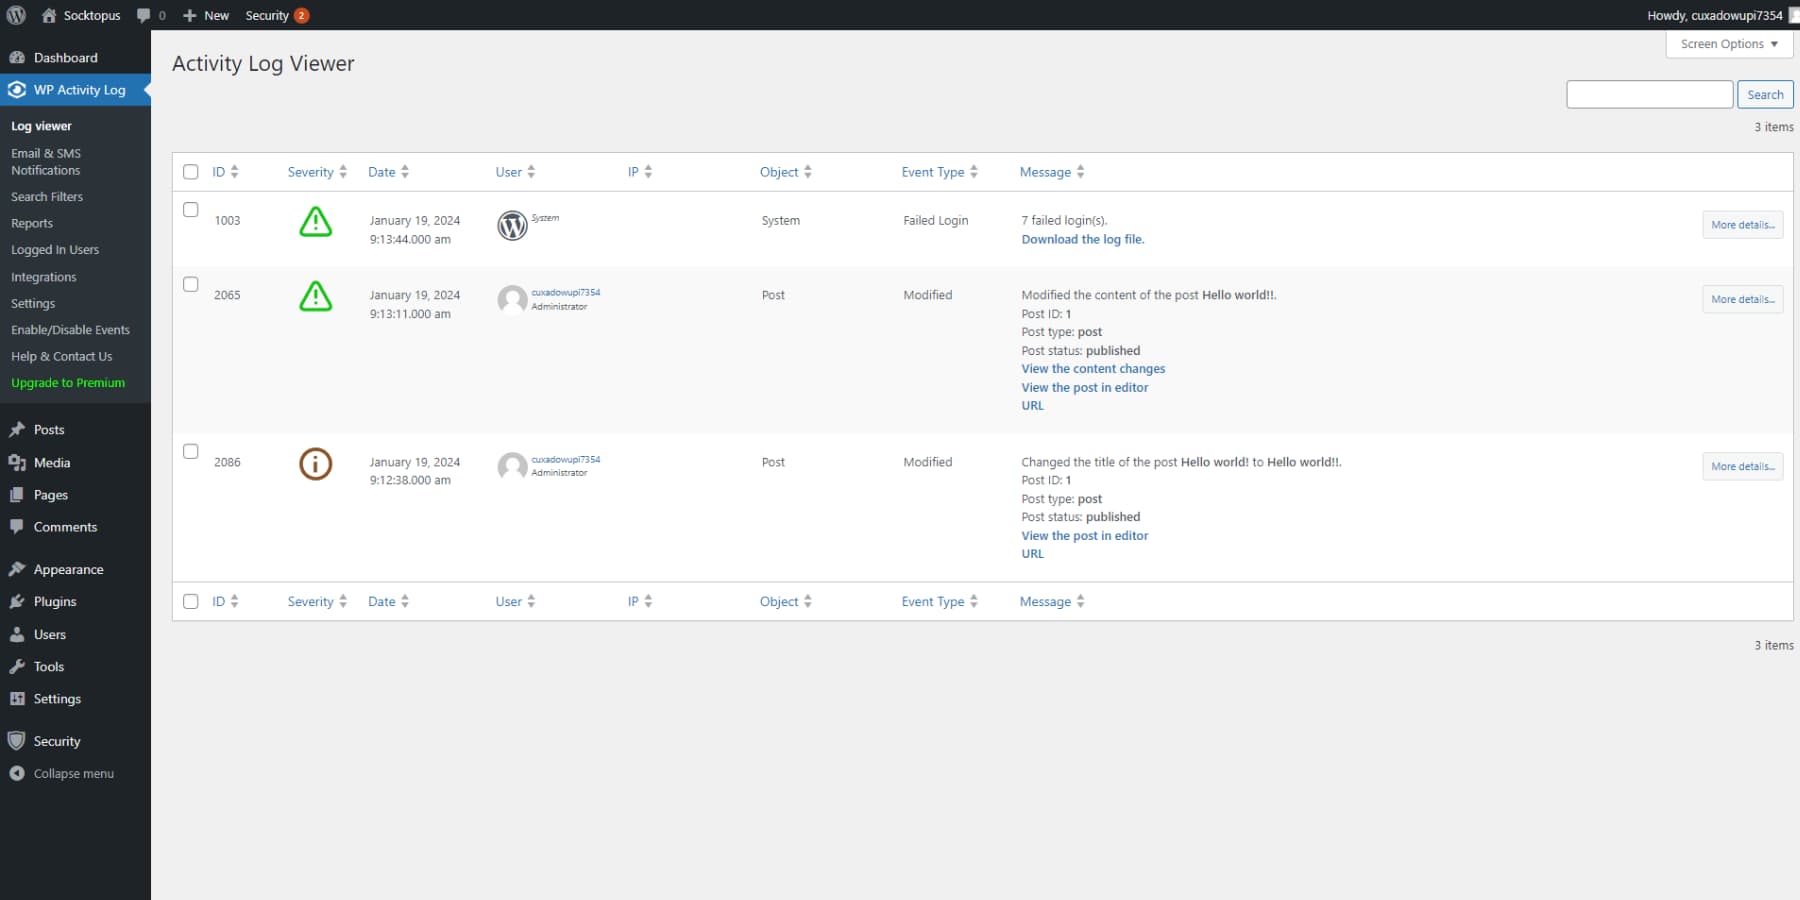 A screenshot of WP Activity Log's User Interface